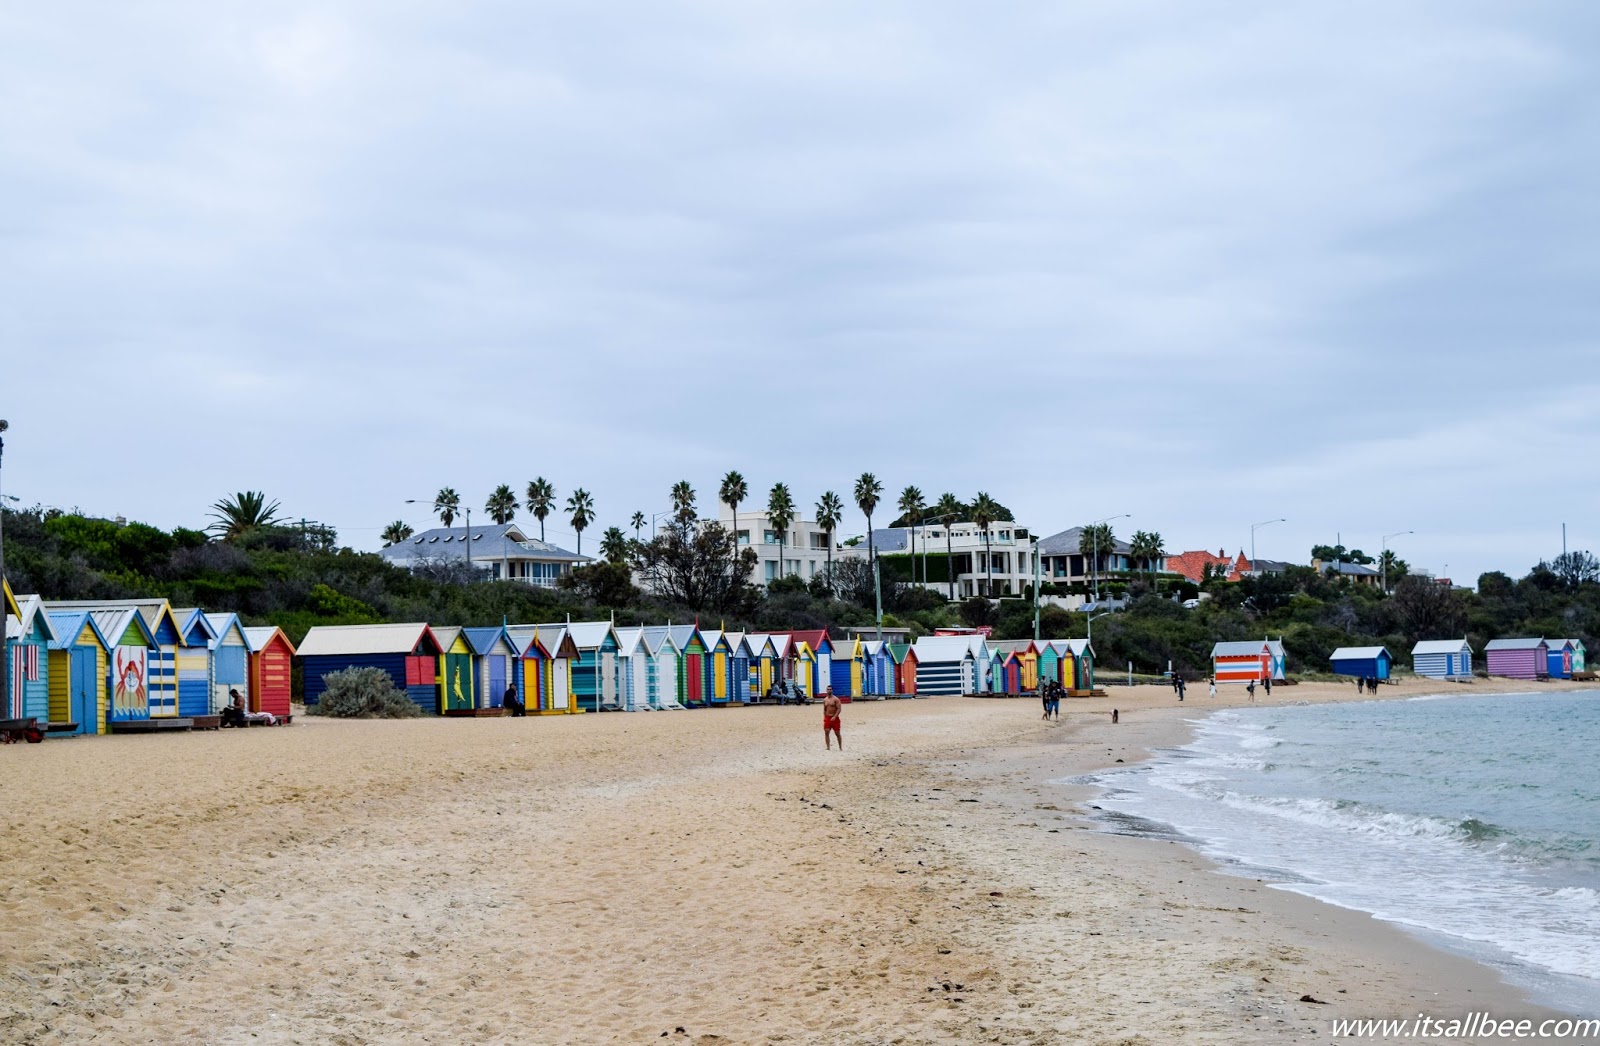 How To Get To Brighton Beach Melbourne's Bathing Boxes Beach By Train #itsallbee #australia #traveltips #beaches #ocean #vacation #takemethere #beachlife